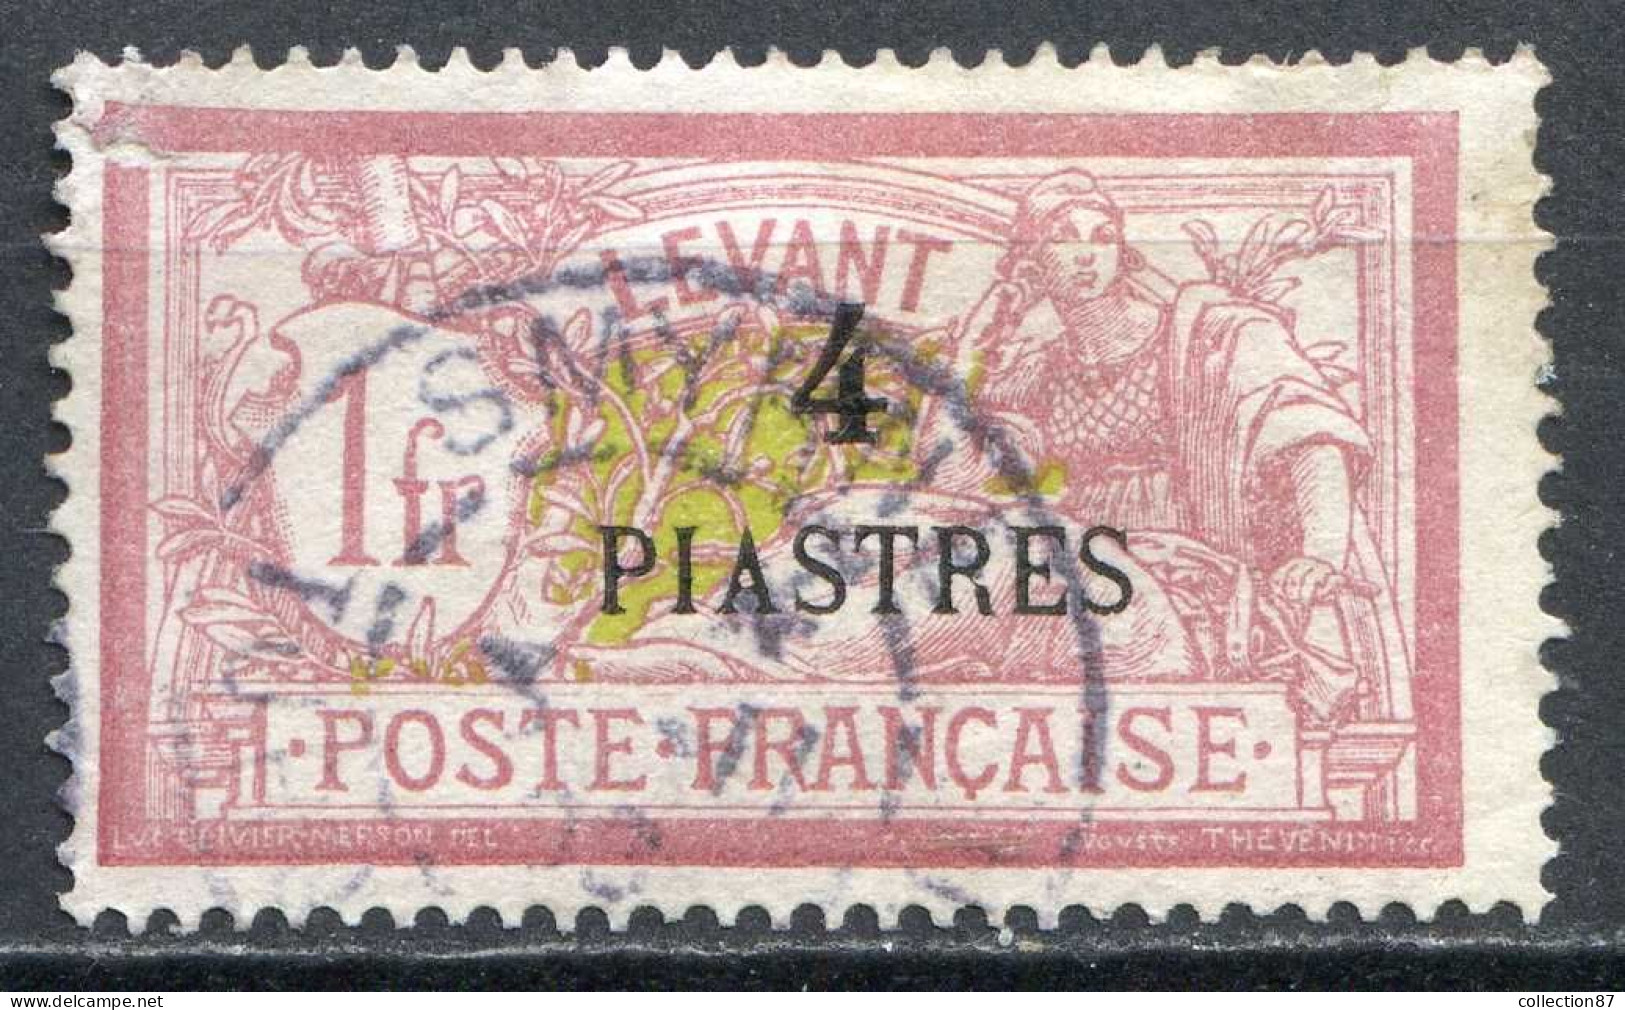 REF 087 > LEVANT < N° 21 Ø < Oblitéré Cachet Partiel Smyrne < Ø Used < Type Merson - Used Stamps